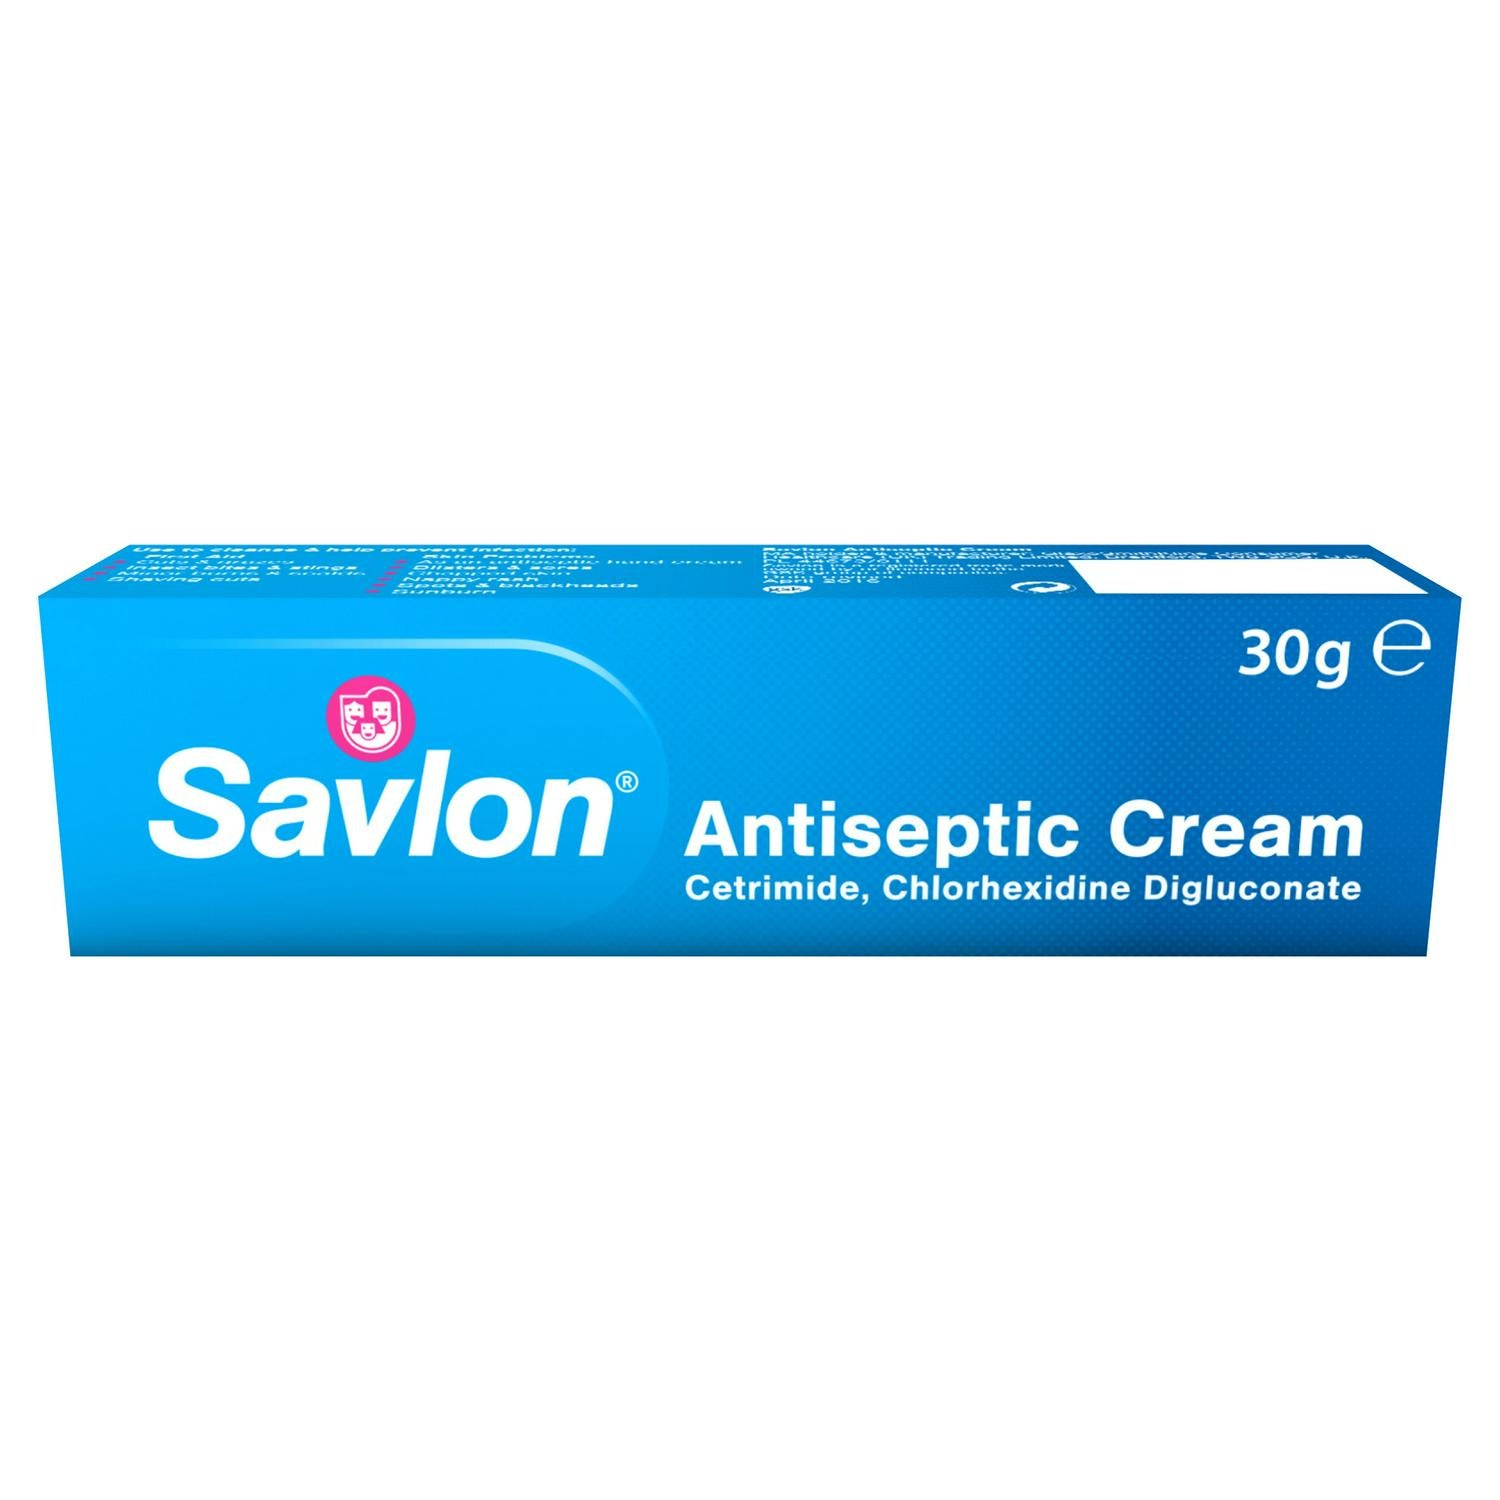 Savlon Antiseptic Cream 30g*